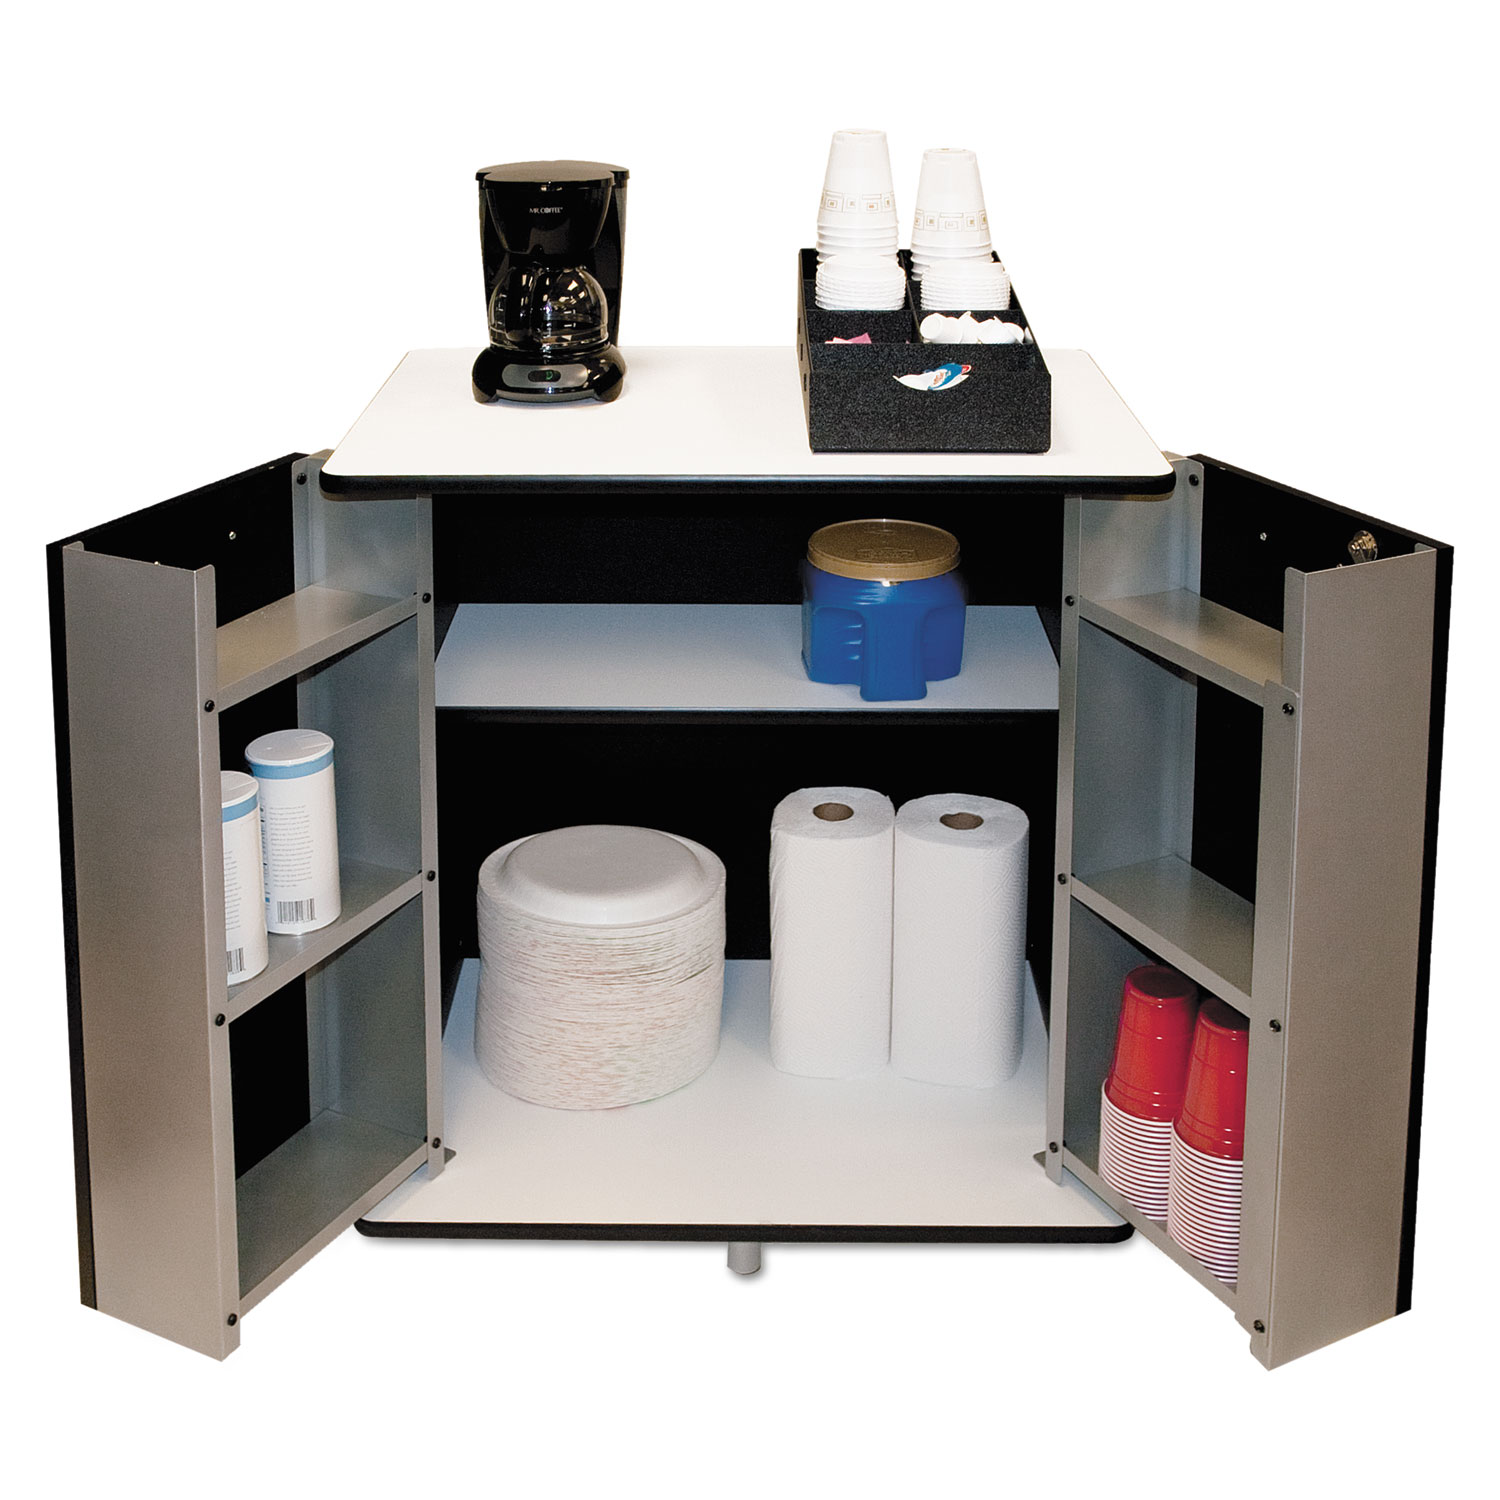  Vertiflex VF35157 Refreshment Stand, Two-Shelf, 29.5w x 21d x 33h, Black/White (VRT35157) 